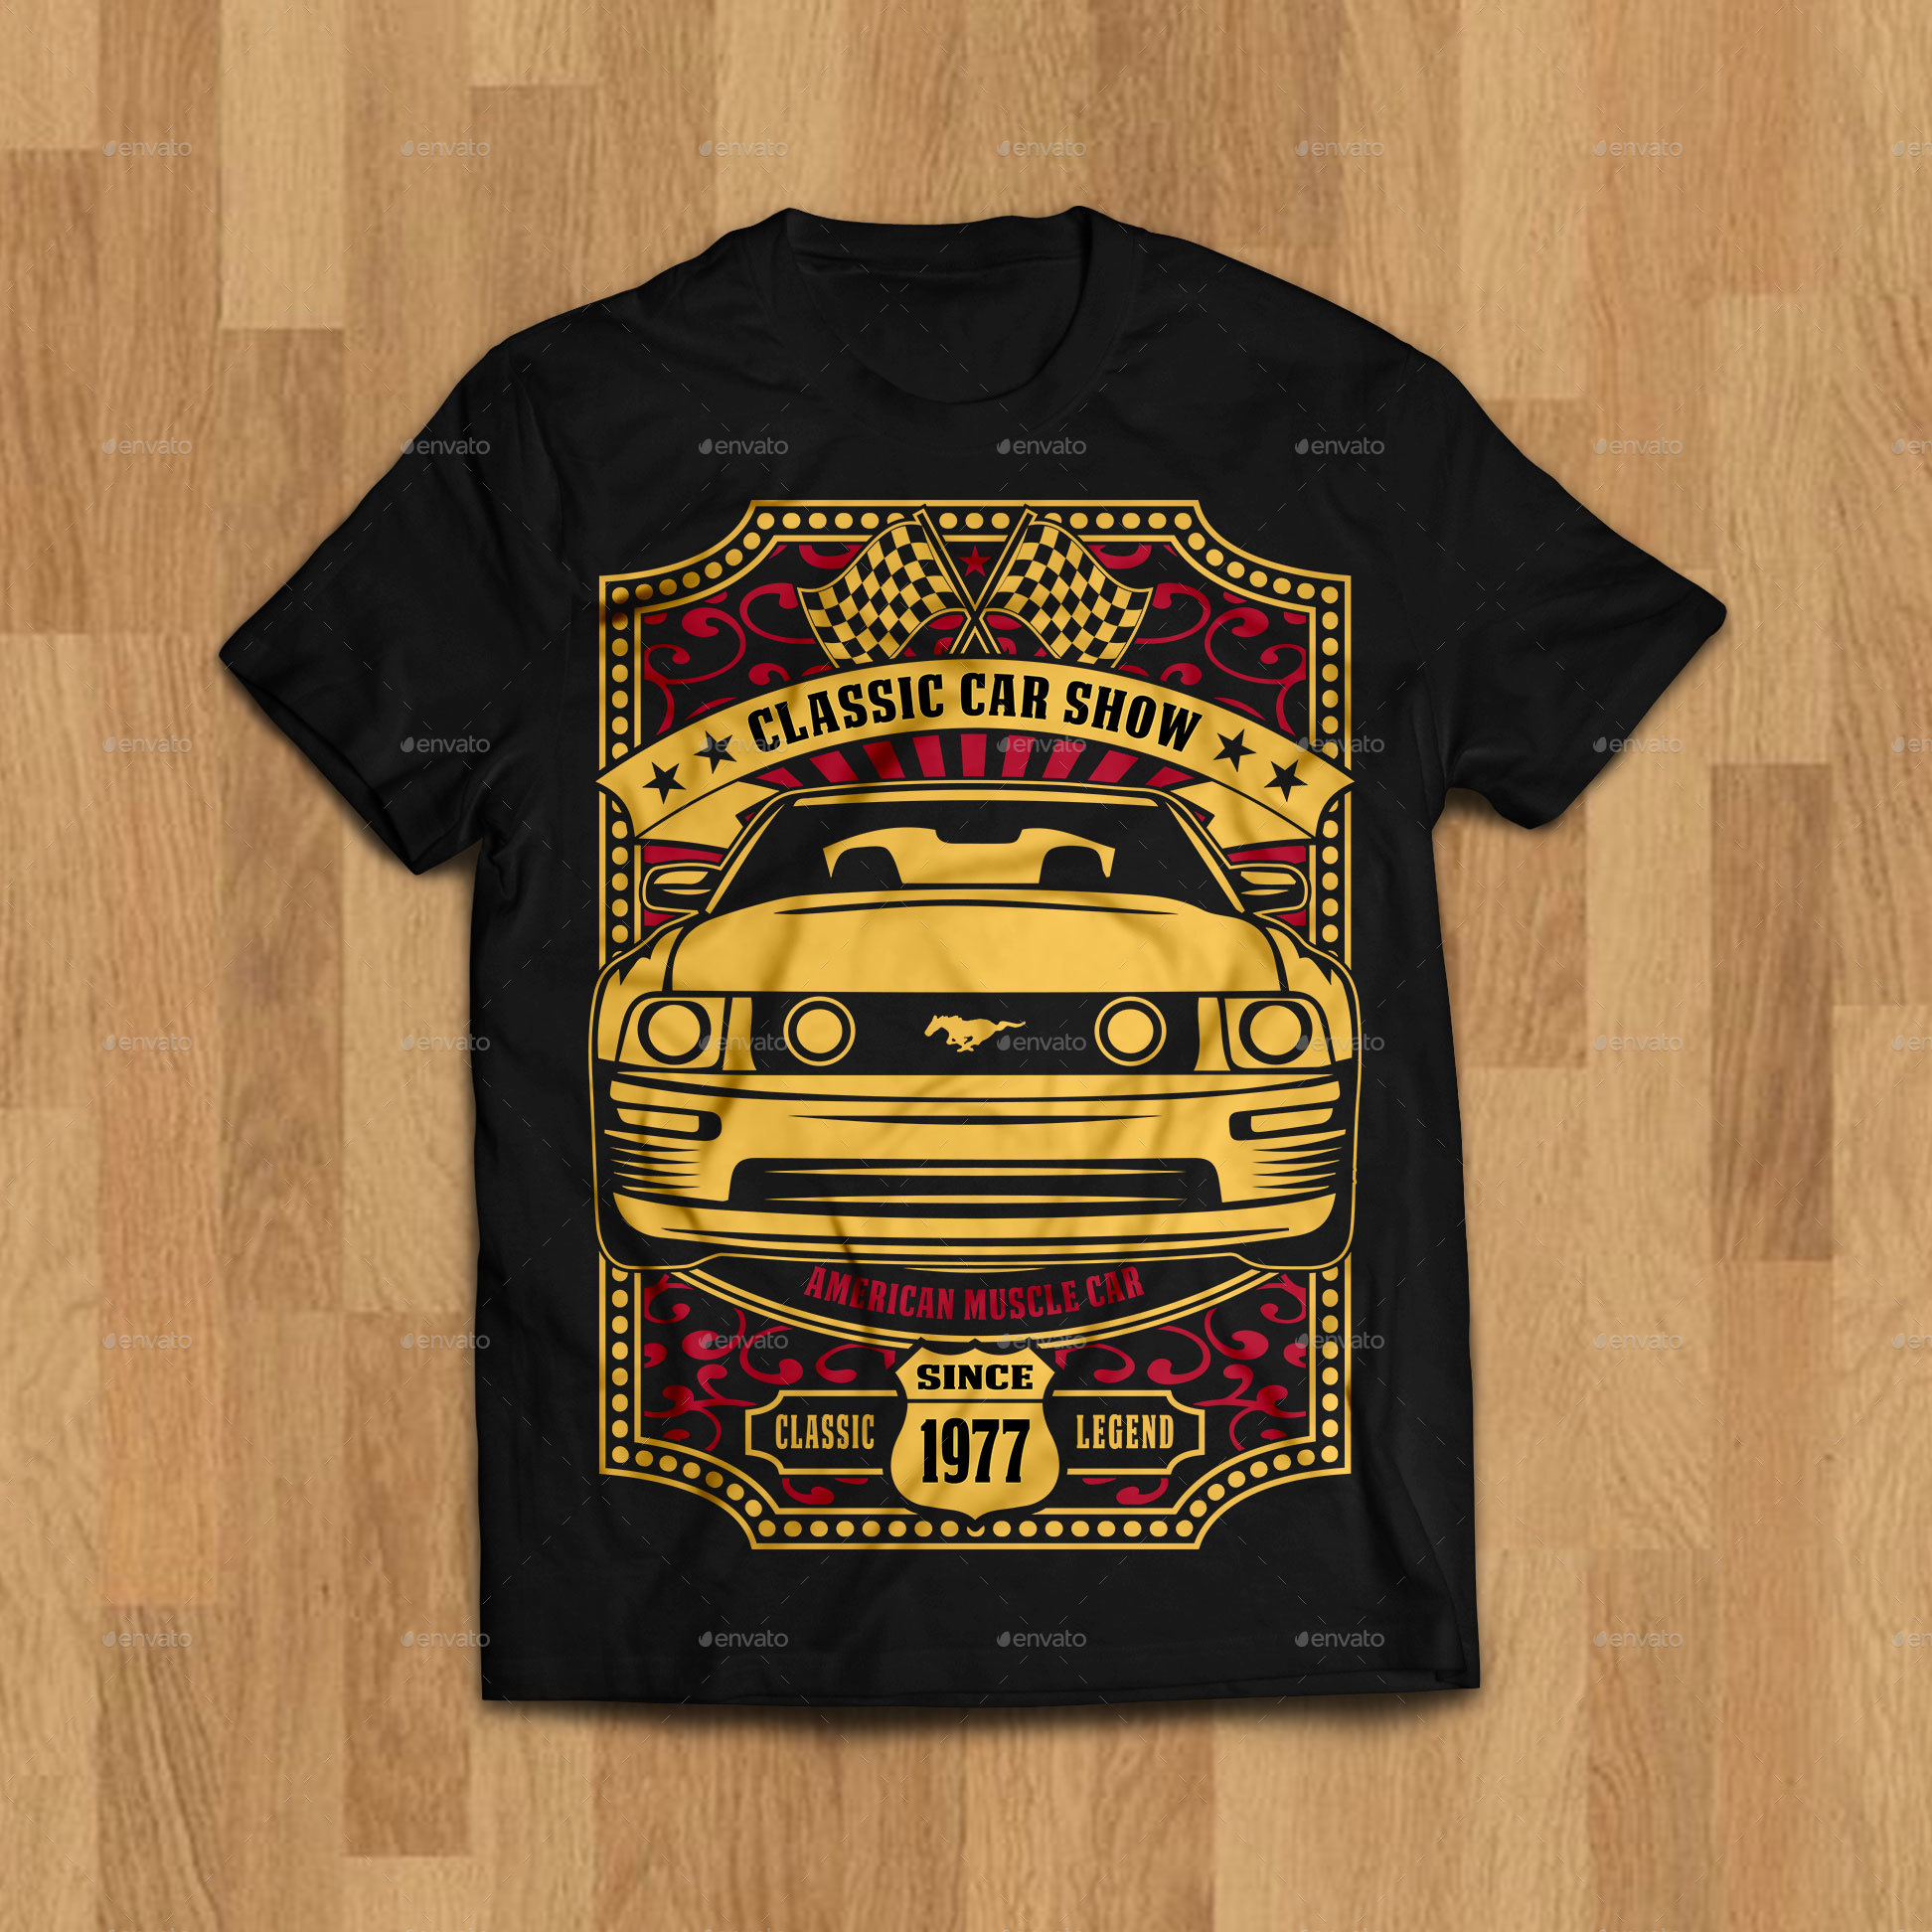 6 Classic Car Show tshirt design by Khoironi95 GraphicRiver